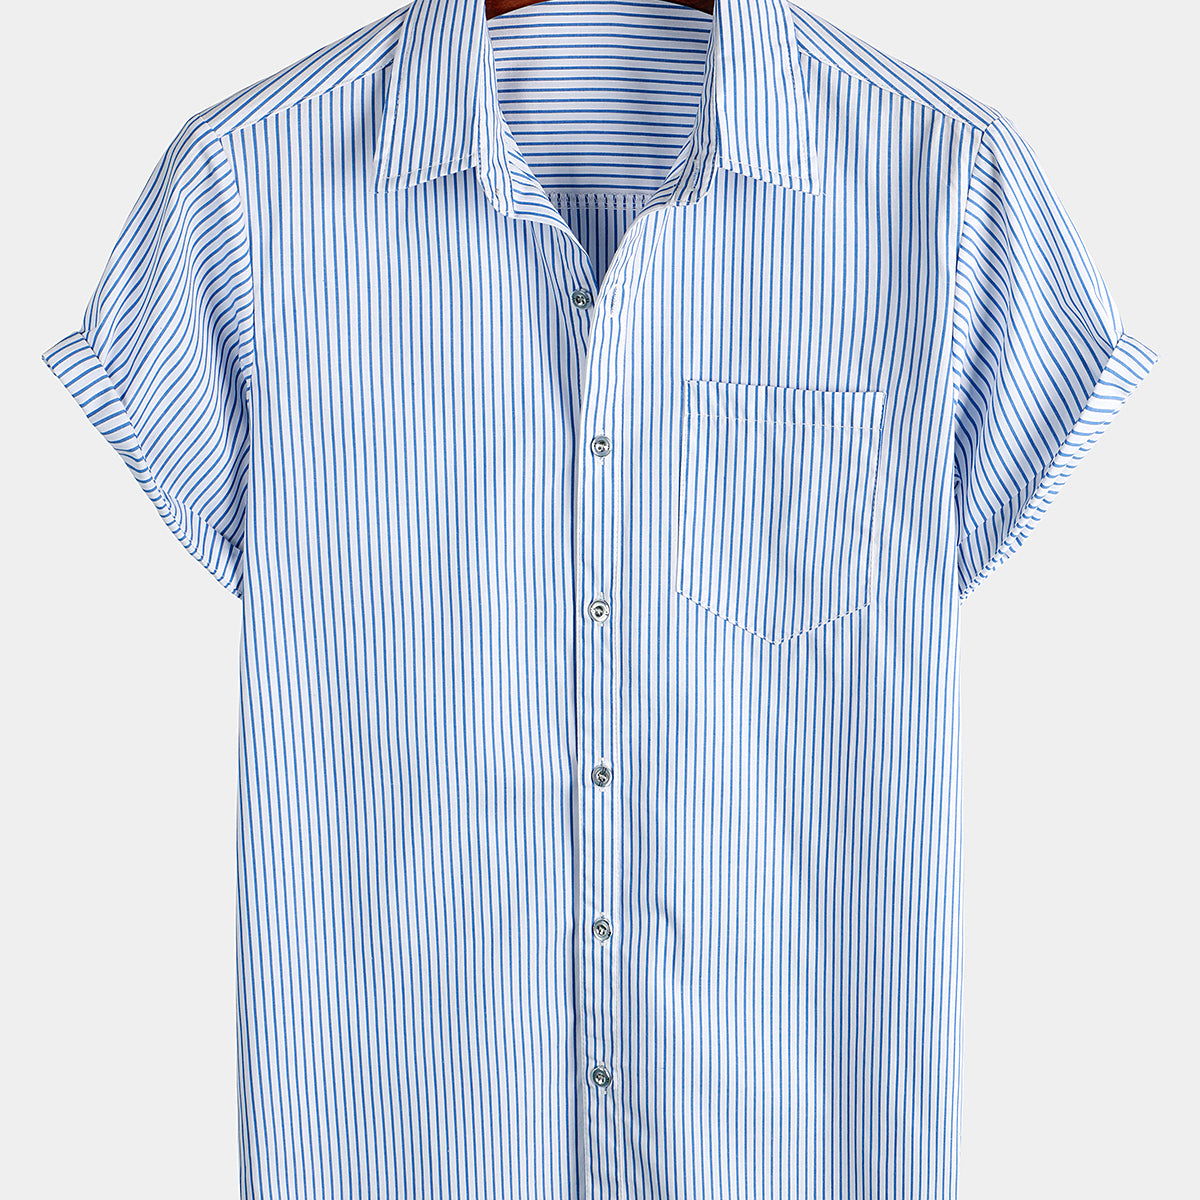 Men's Casual Pocket Short Sleeved Button Up Shirt